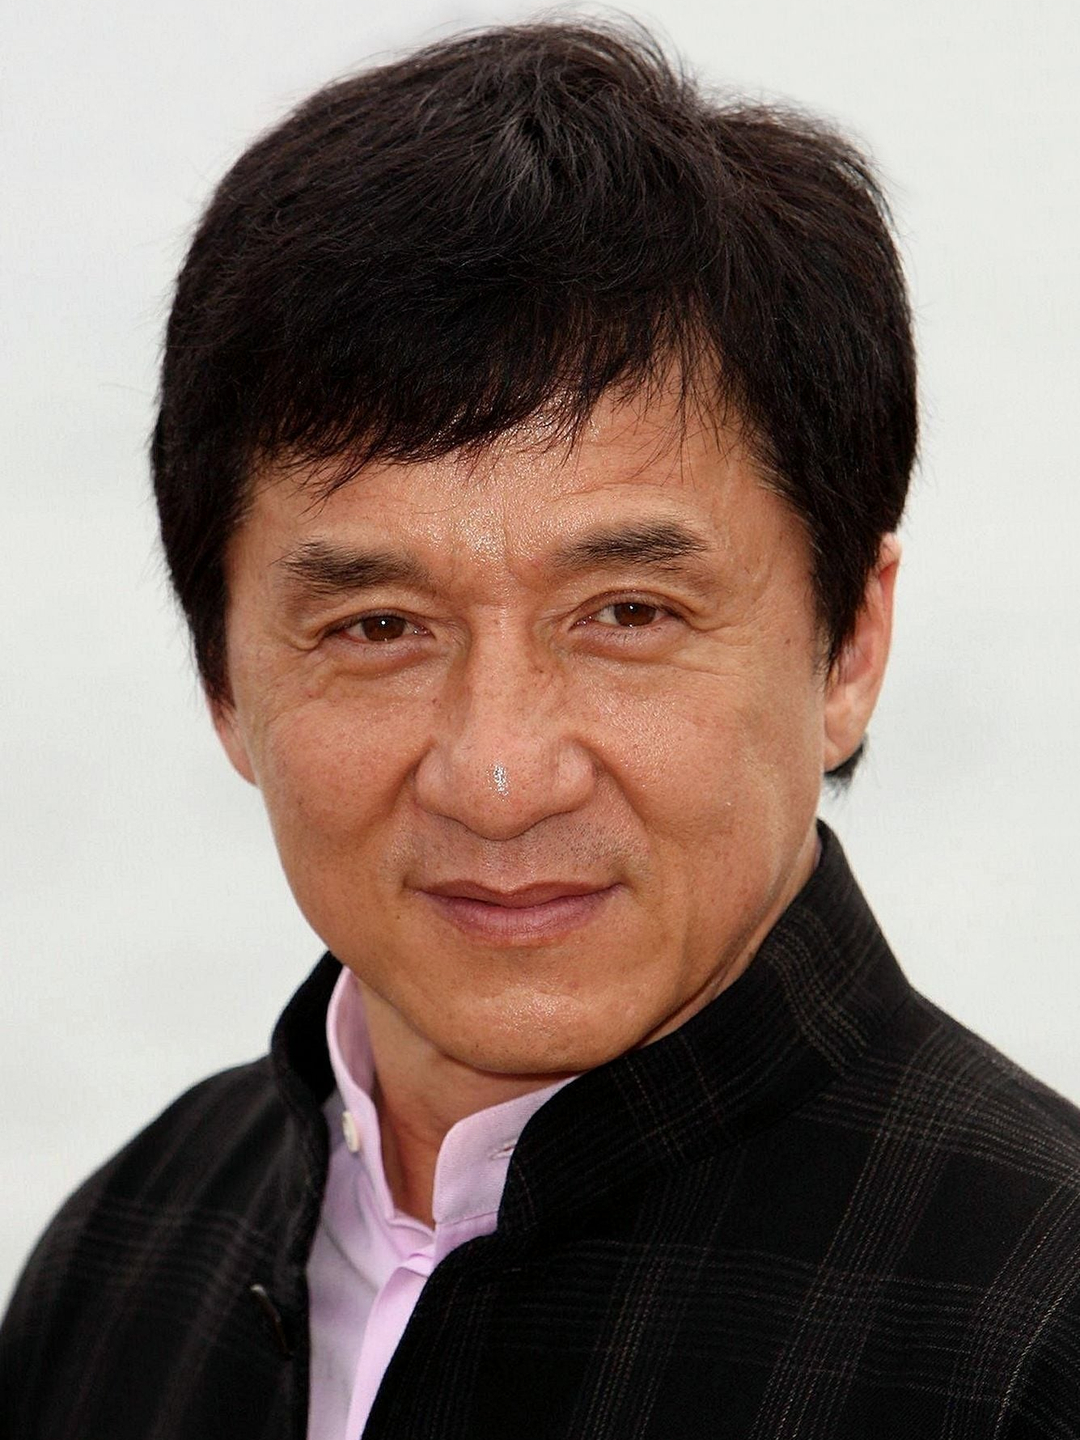 Jackie Chan main achievements